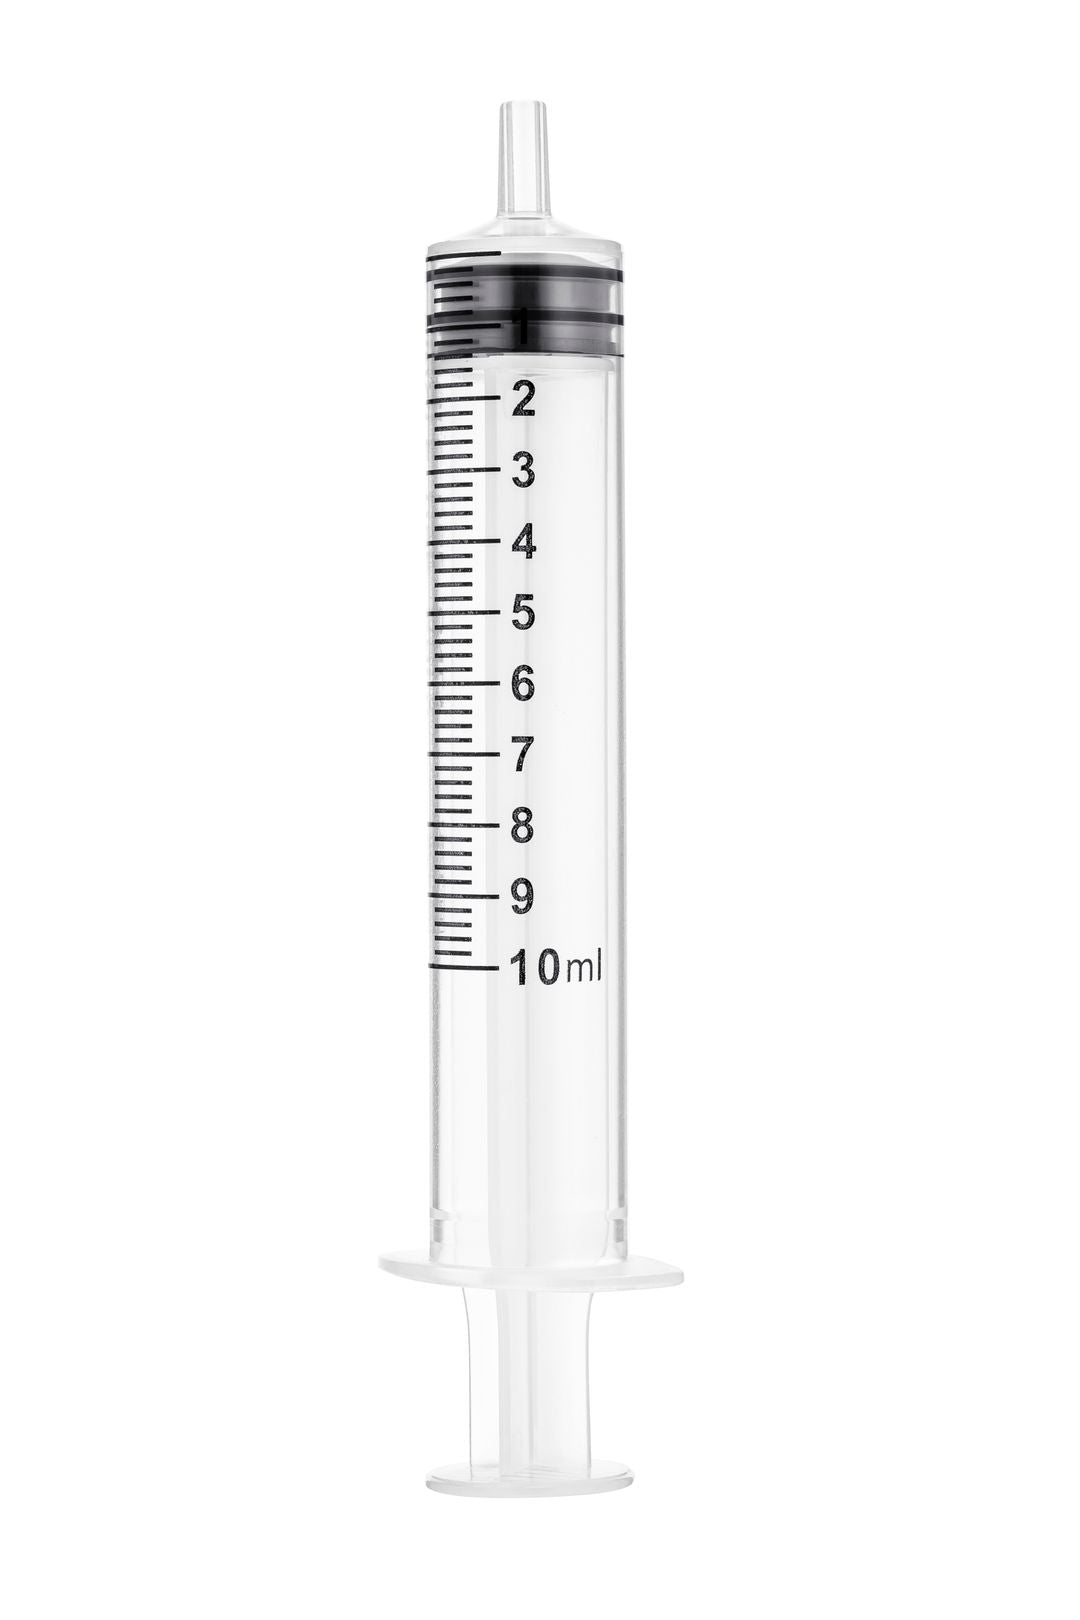 Case/1000 - SOL-M 10ml Luer Lock Syringe w/o Needle (bulk, non-sterile)